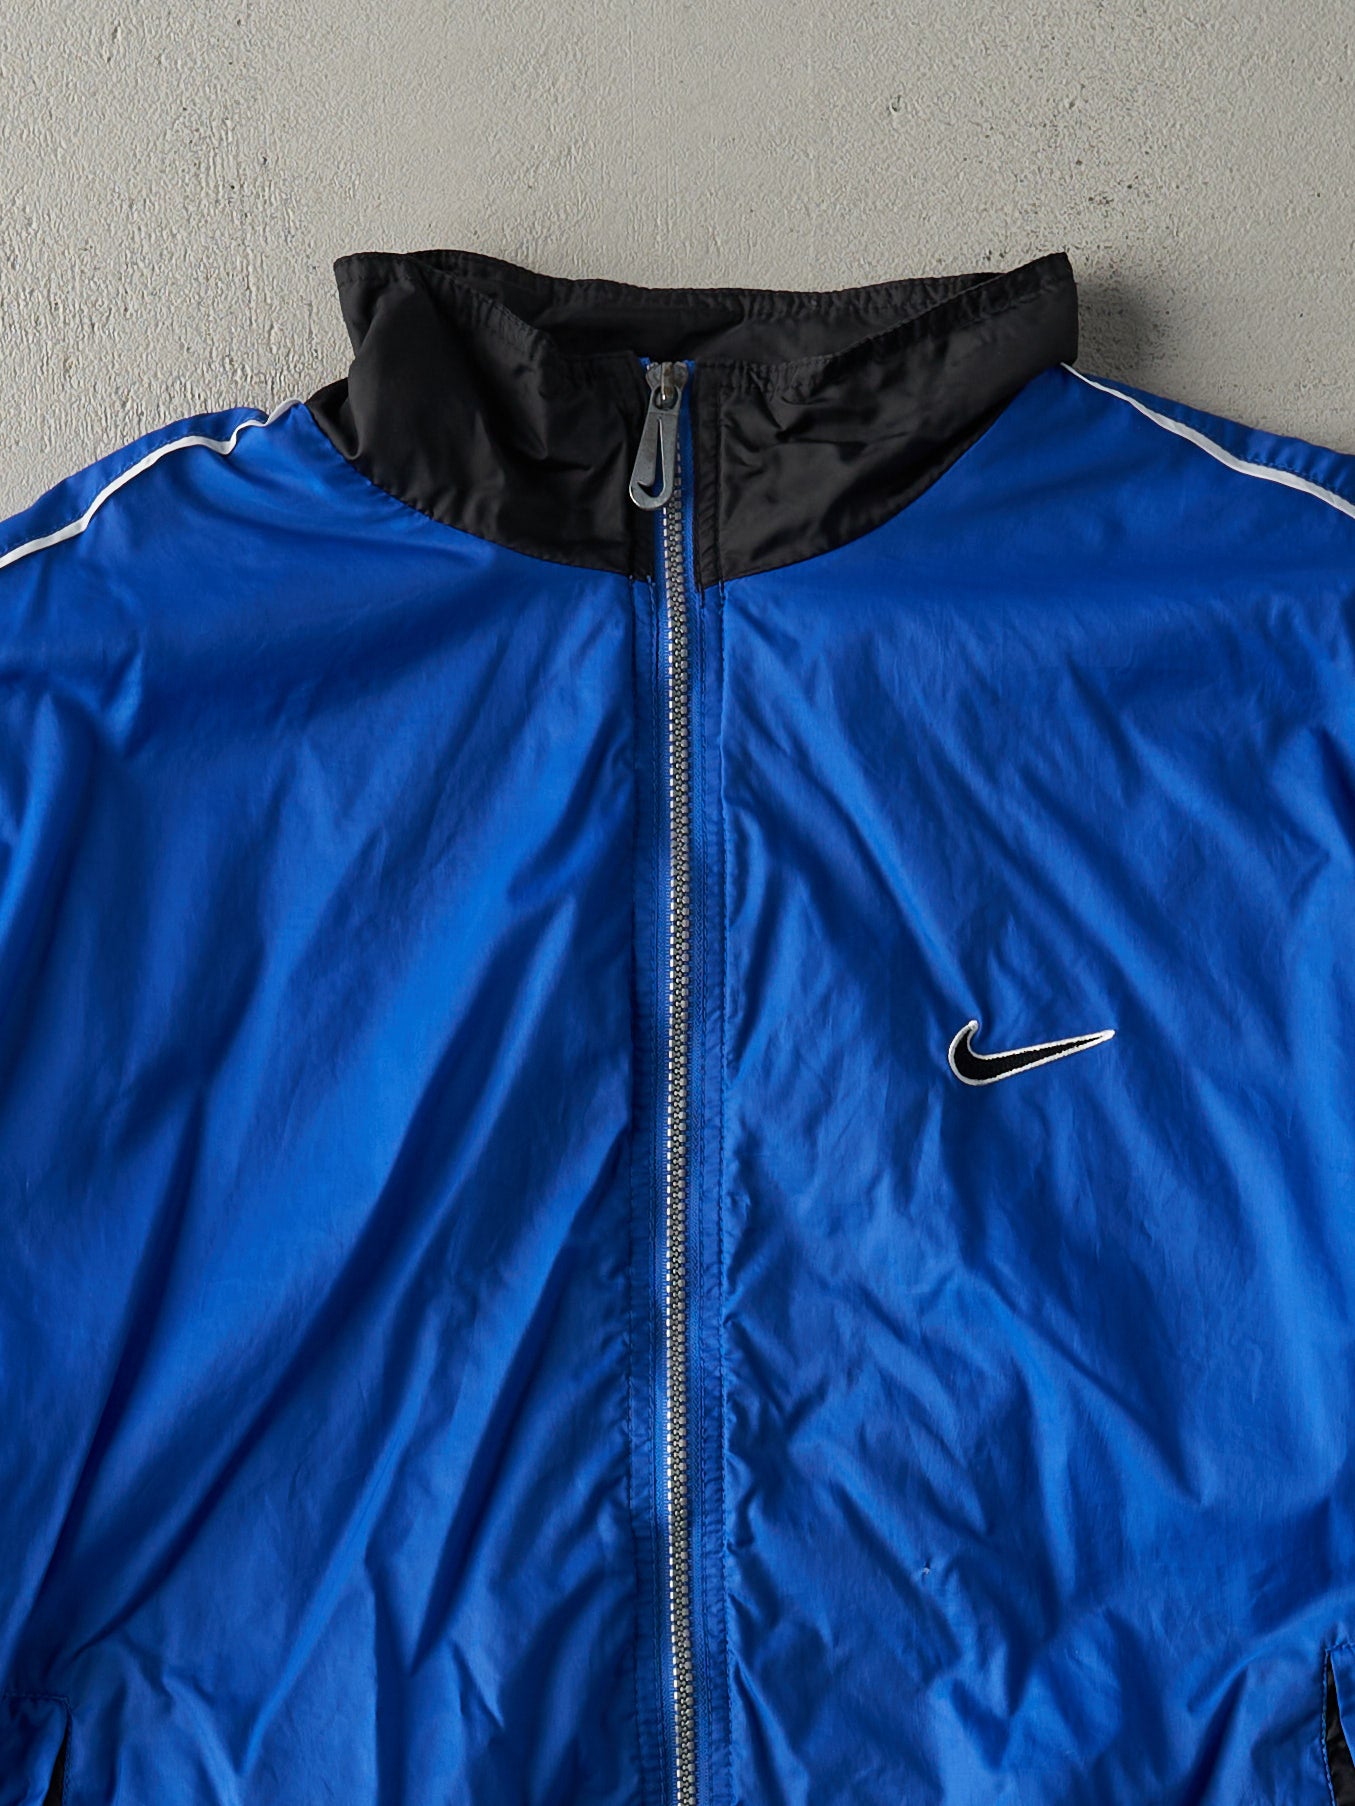 Vintage 90s Blue & Black Nike Windbreaker Jacket (M)